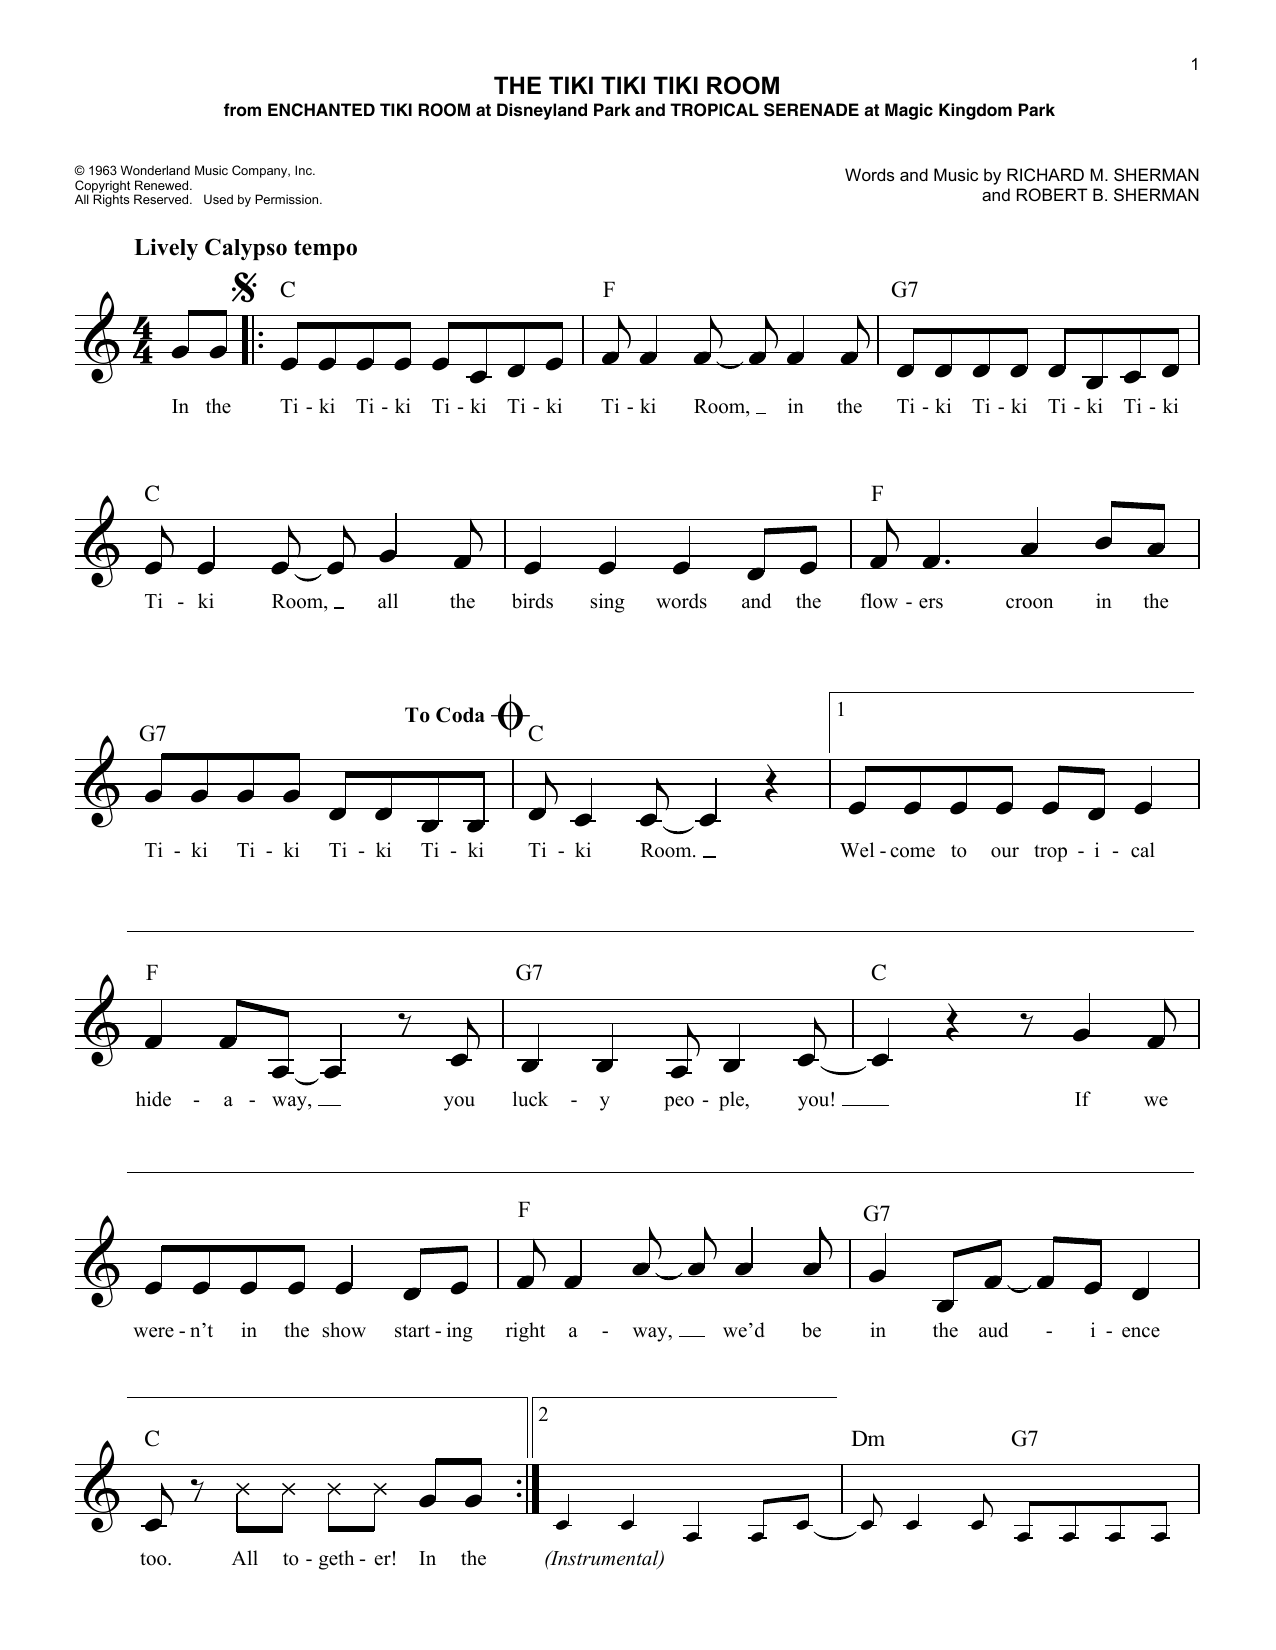 Download Richard M. Sherman The Tiki Tiki Tiki Room Sheet Music and learn how to play Melody Line, Lyrics & Chords PDF digital score in minutes